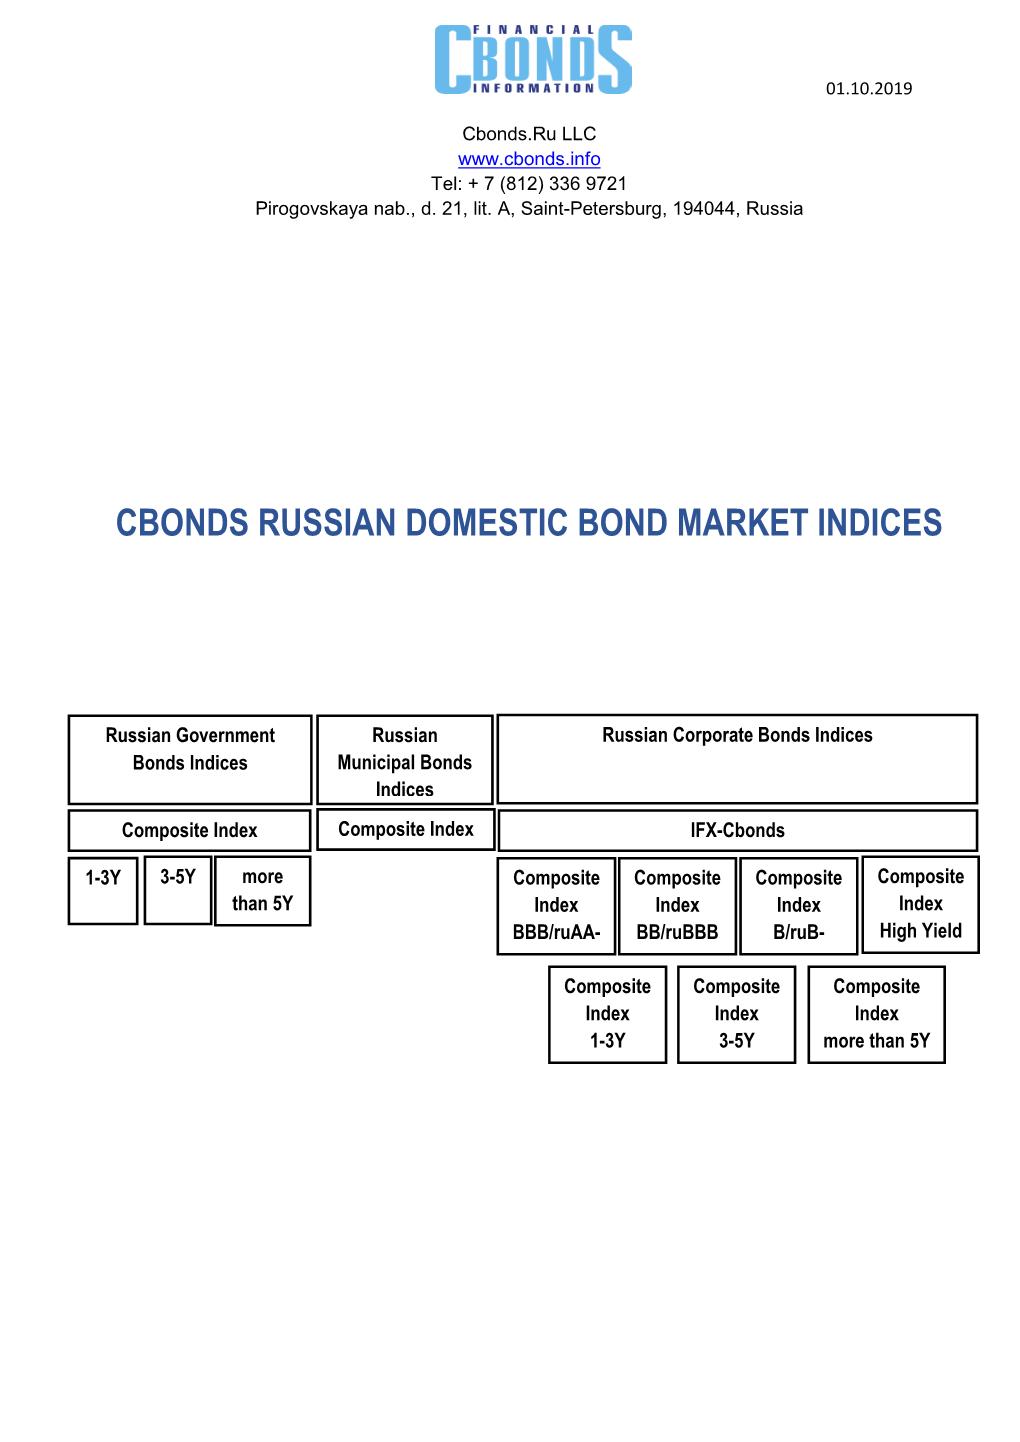 Cbonds Russian Domestic Bond Market Indices